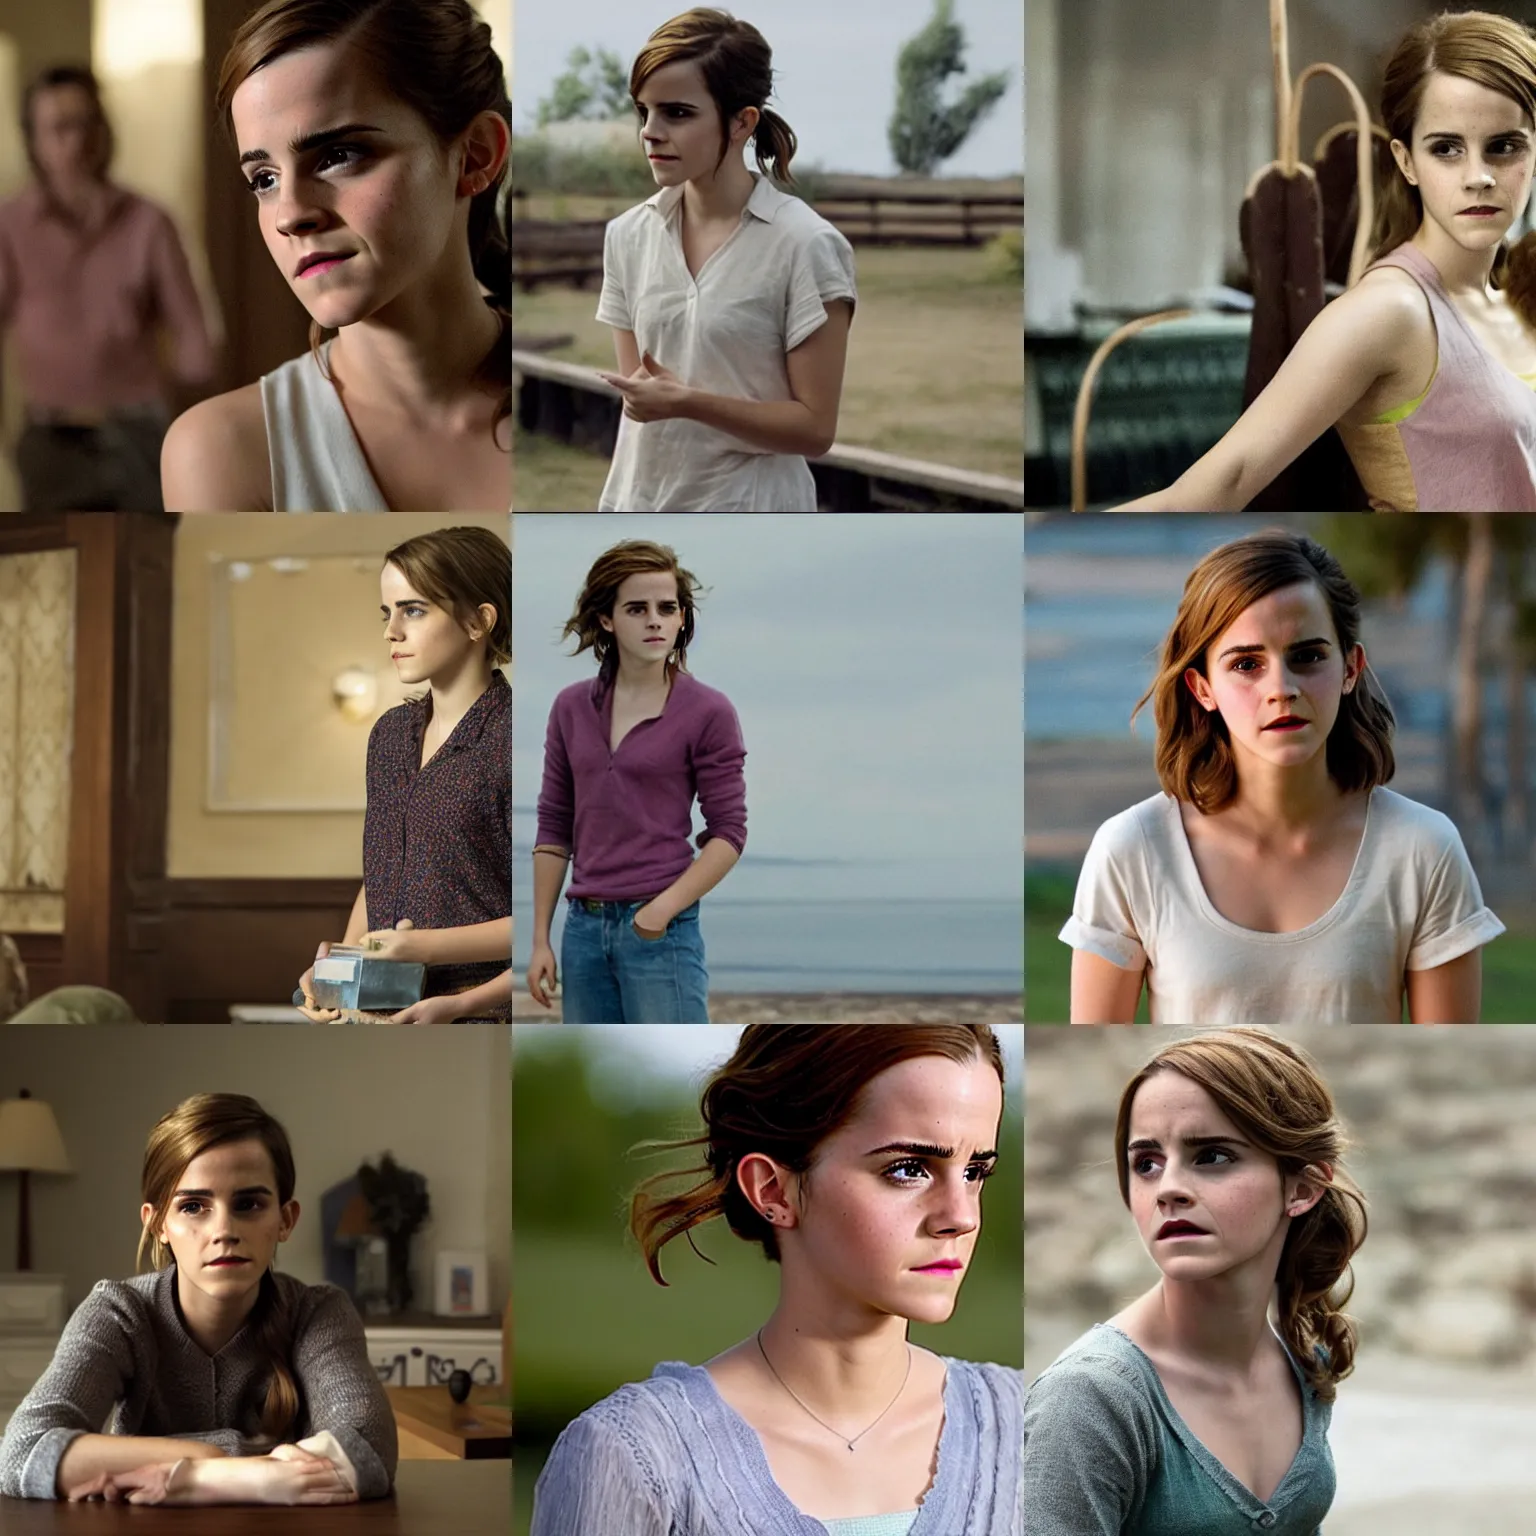 Prompt: Movie still of Emma Watson in Foundation